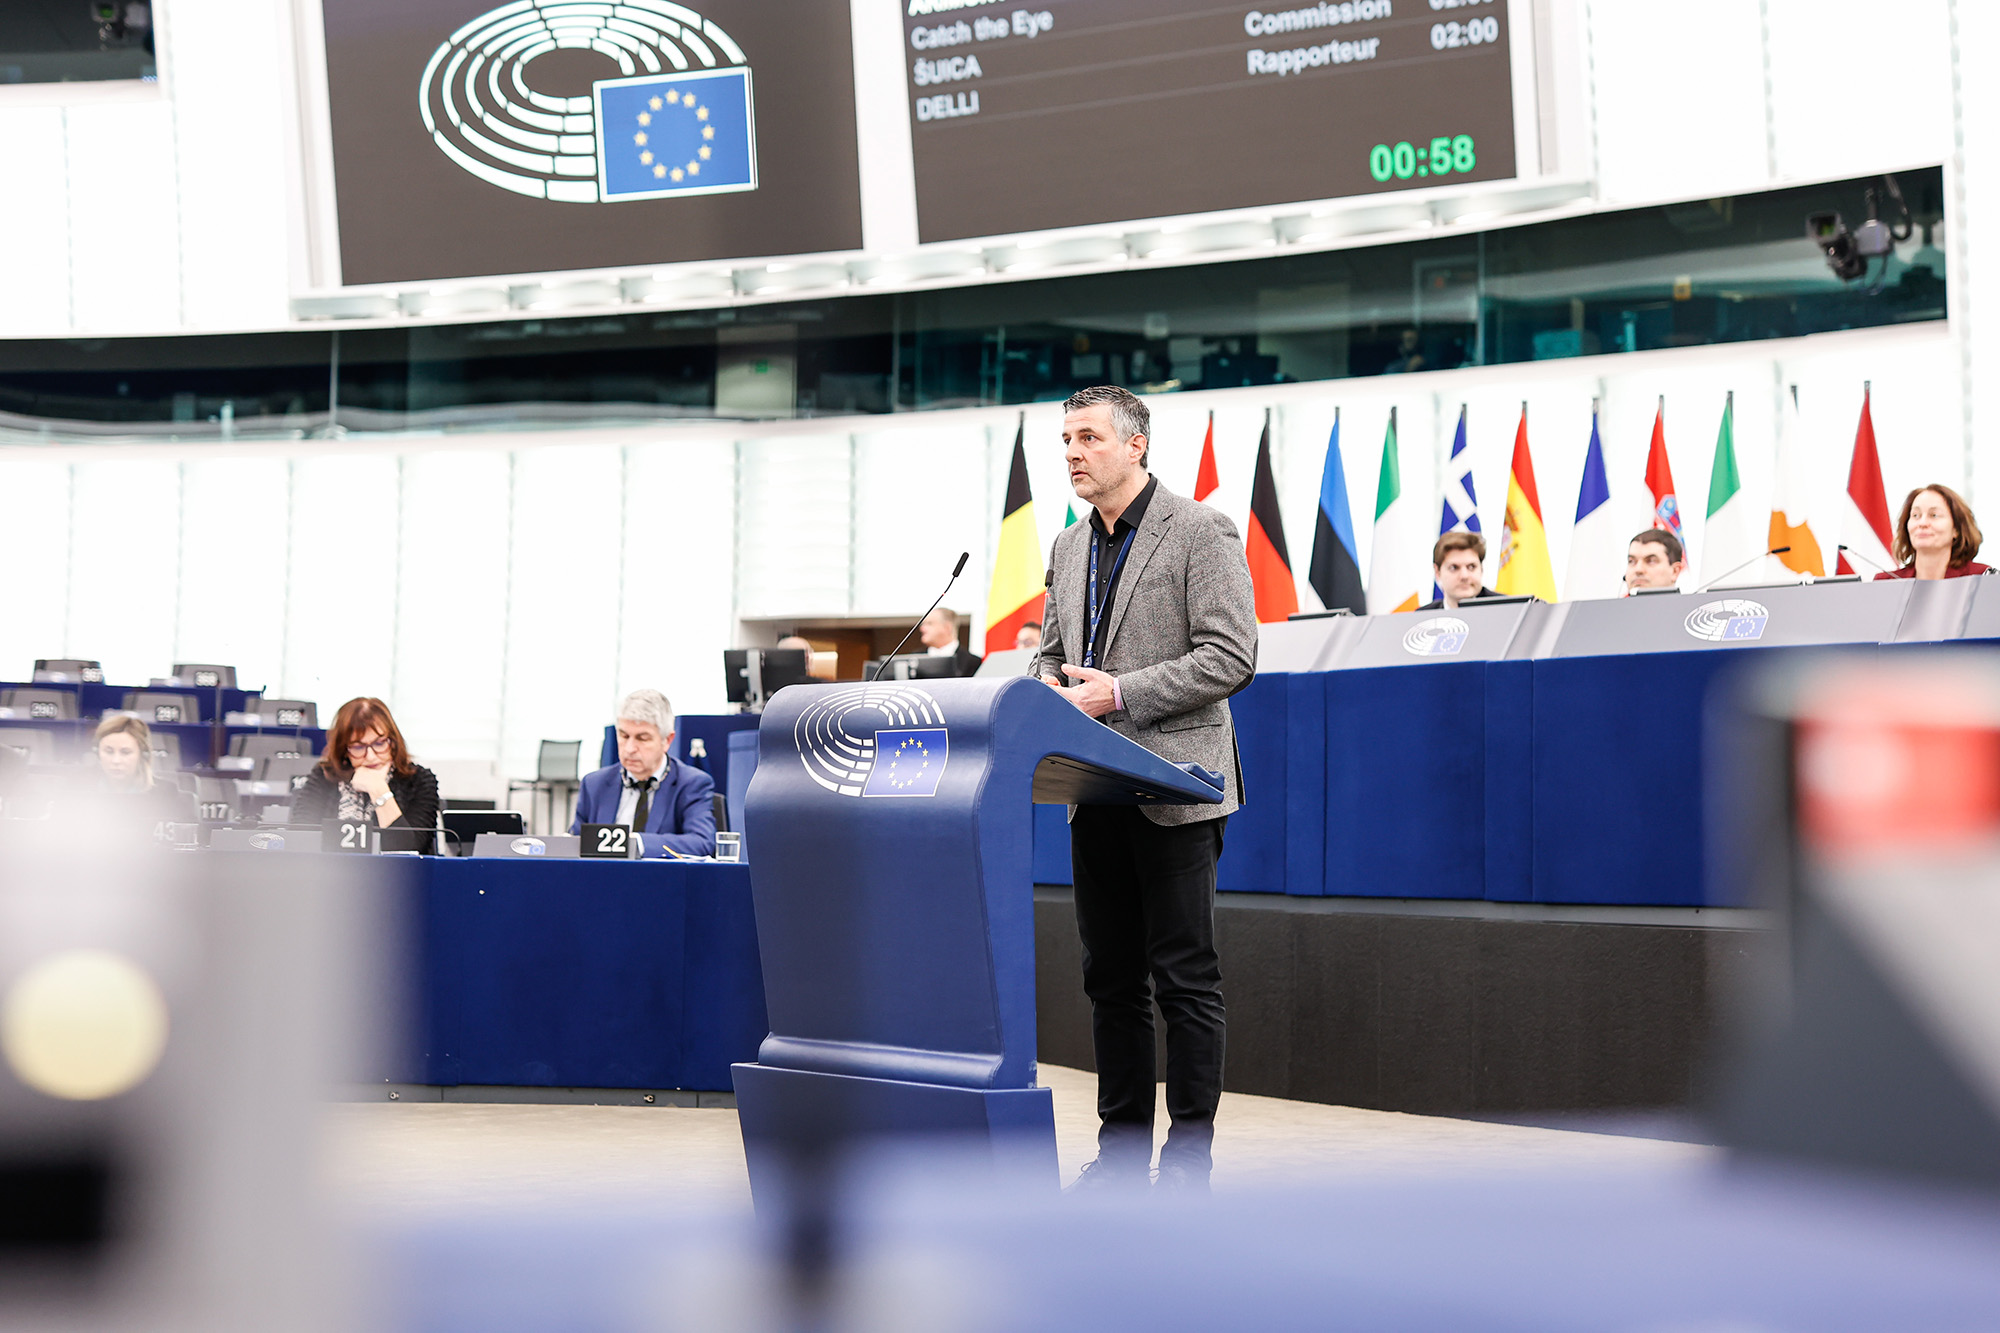 Pascal Arimont bei der Debatte im Plenarsaal des Europäischen Parlaments (Bild: Europäisches Parlament)